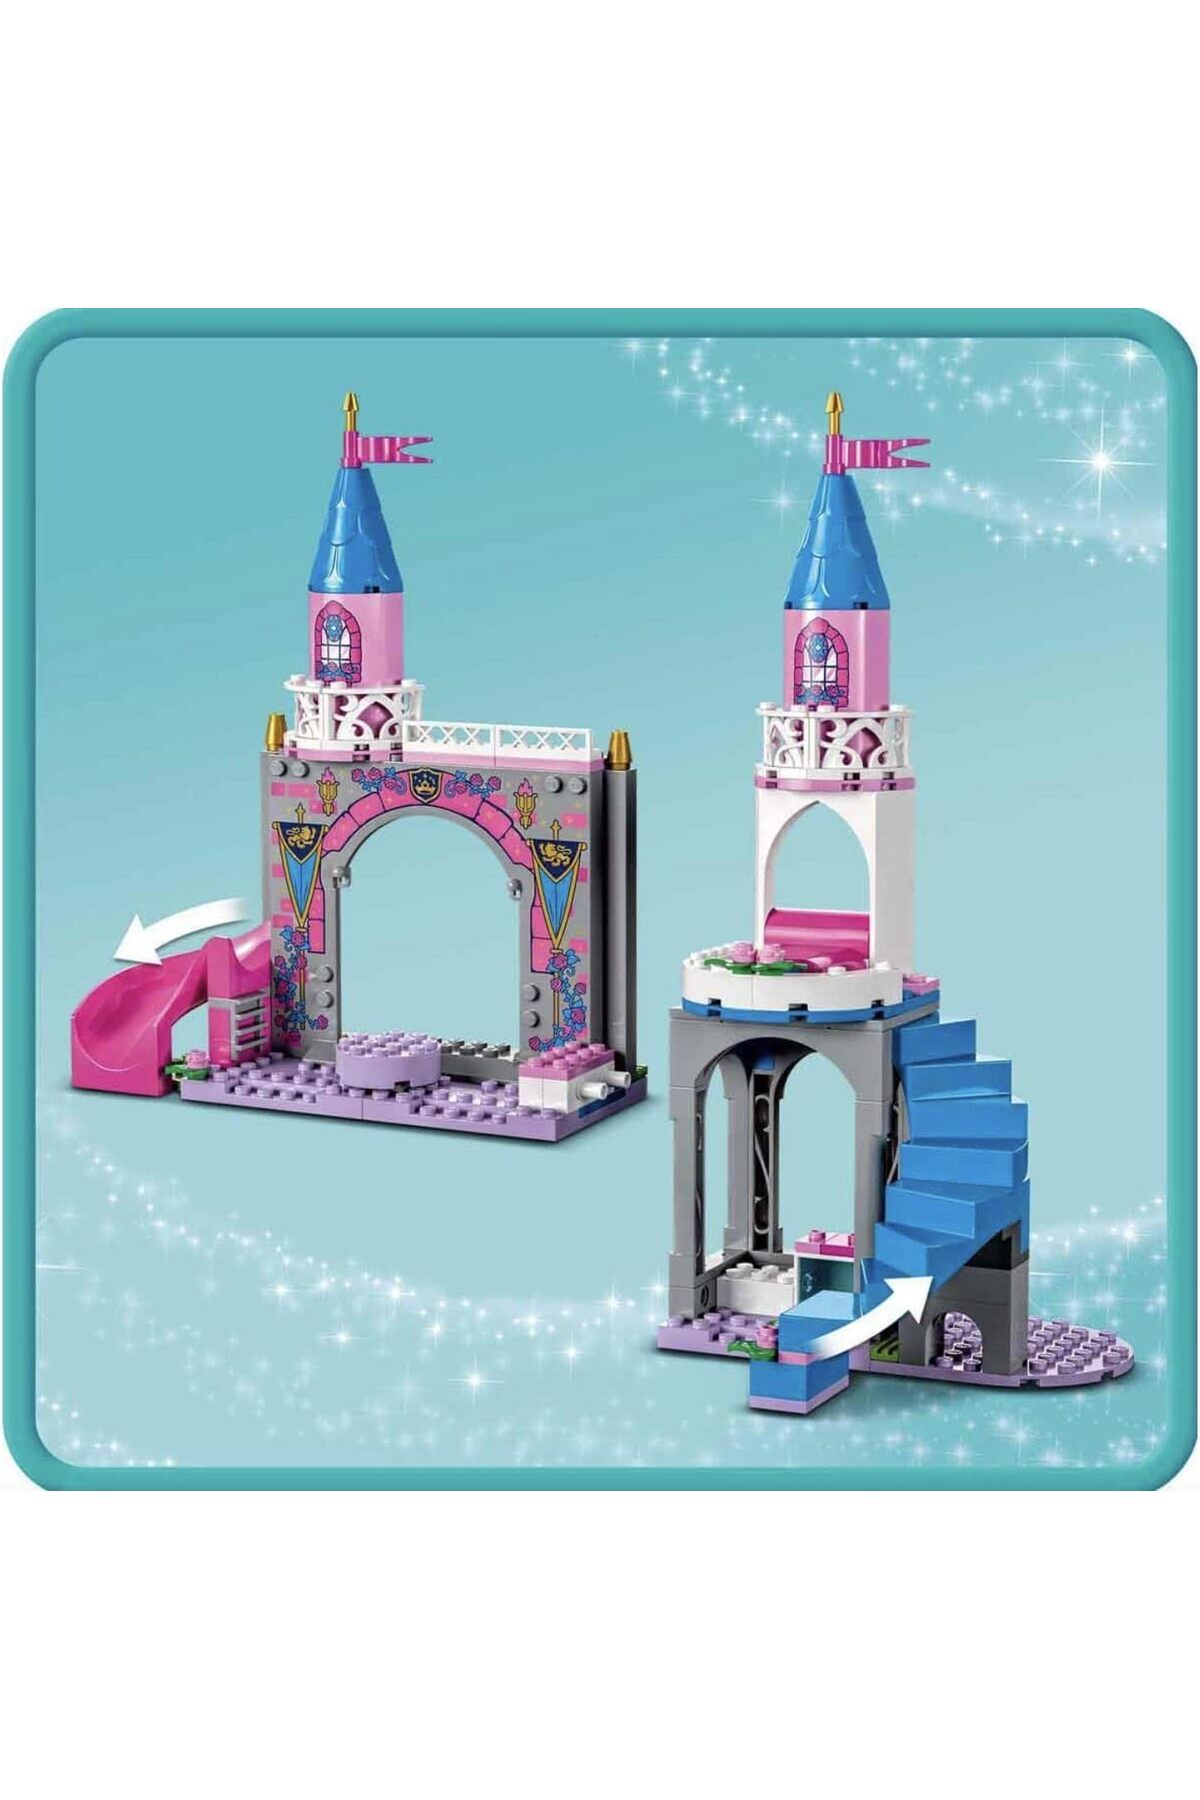 Aurora's Castle 43211, Disney™